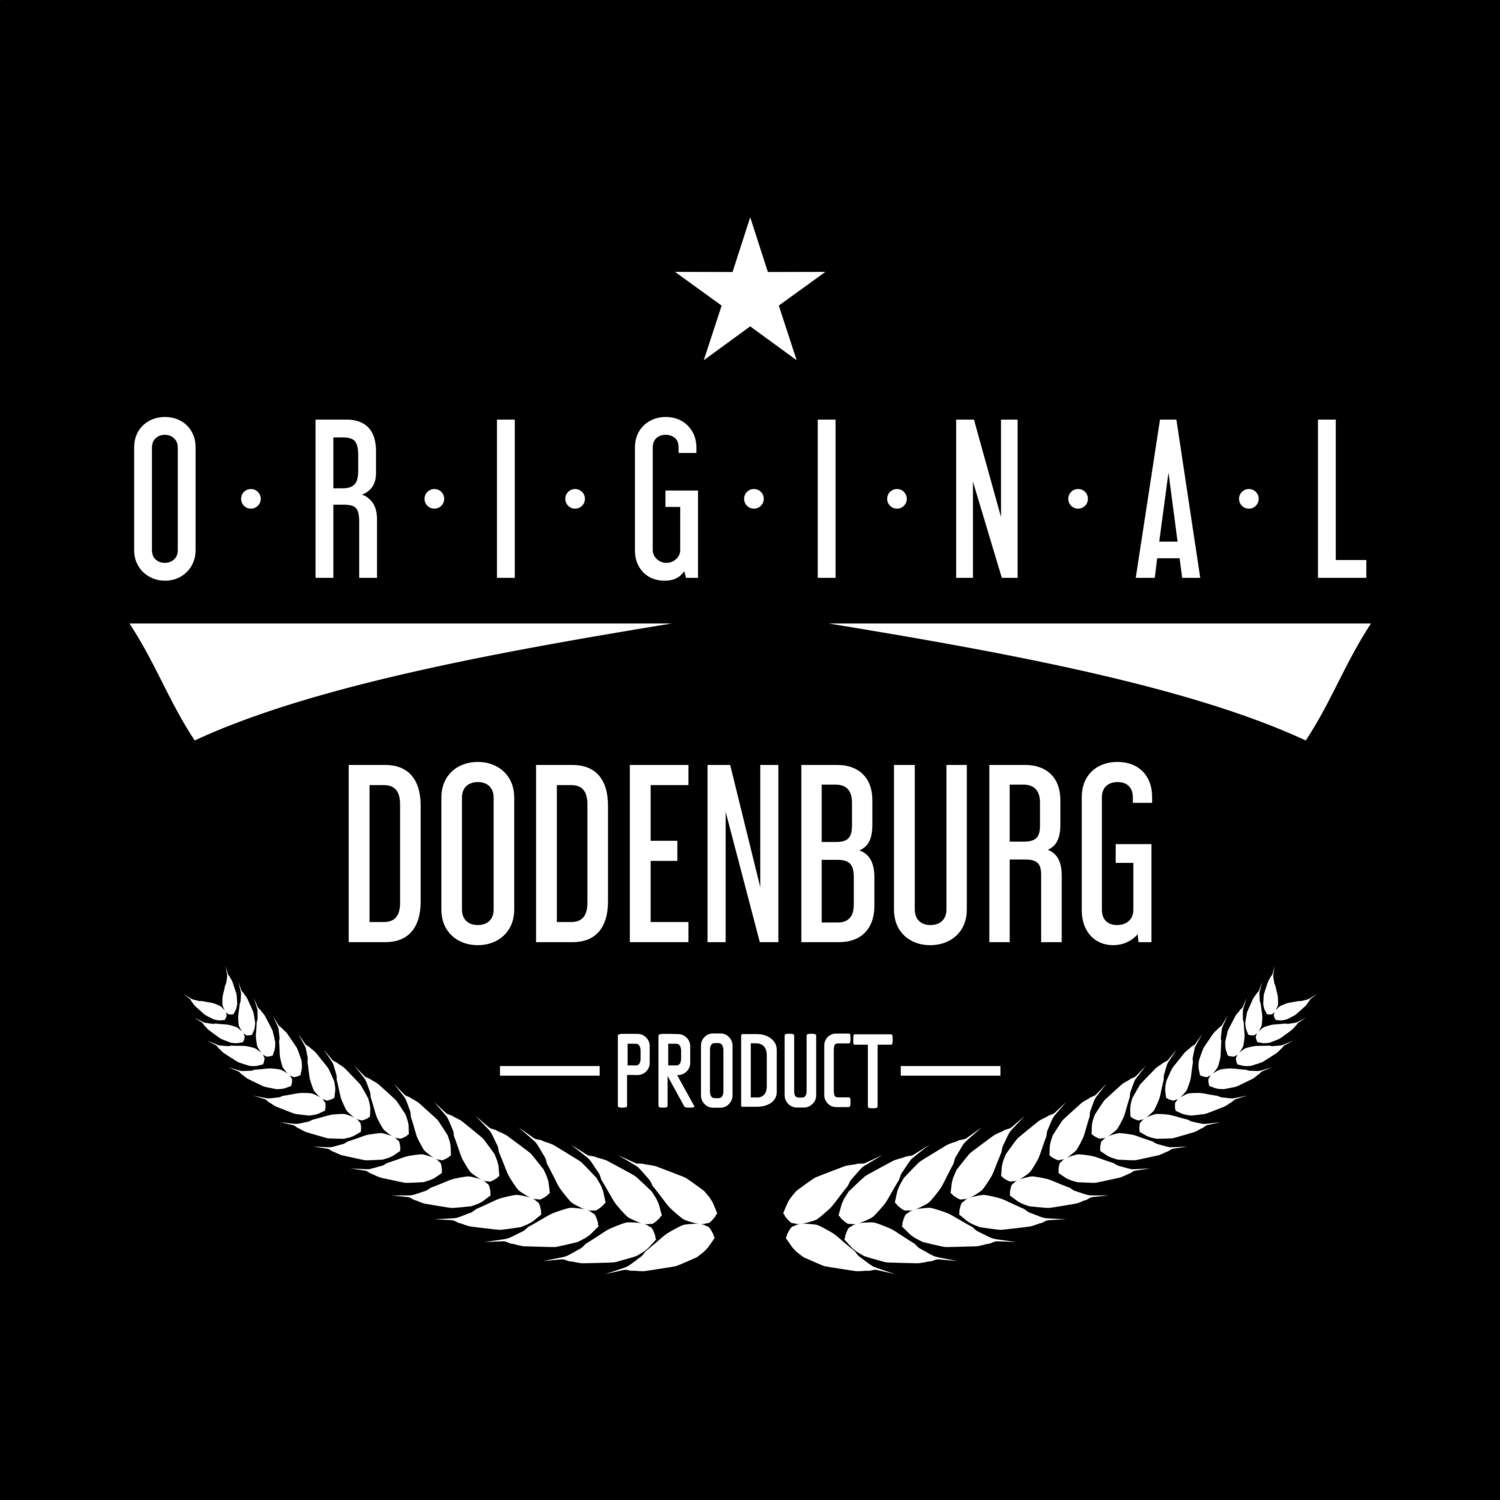 Dodenburg T-Shirt »Original Product«